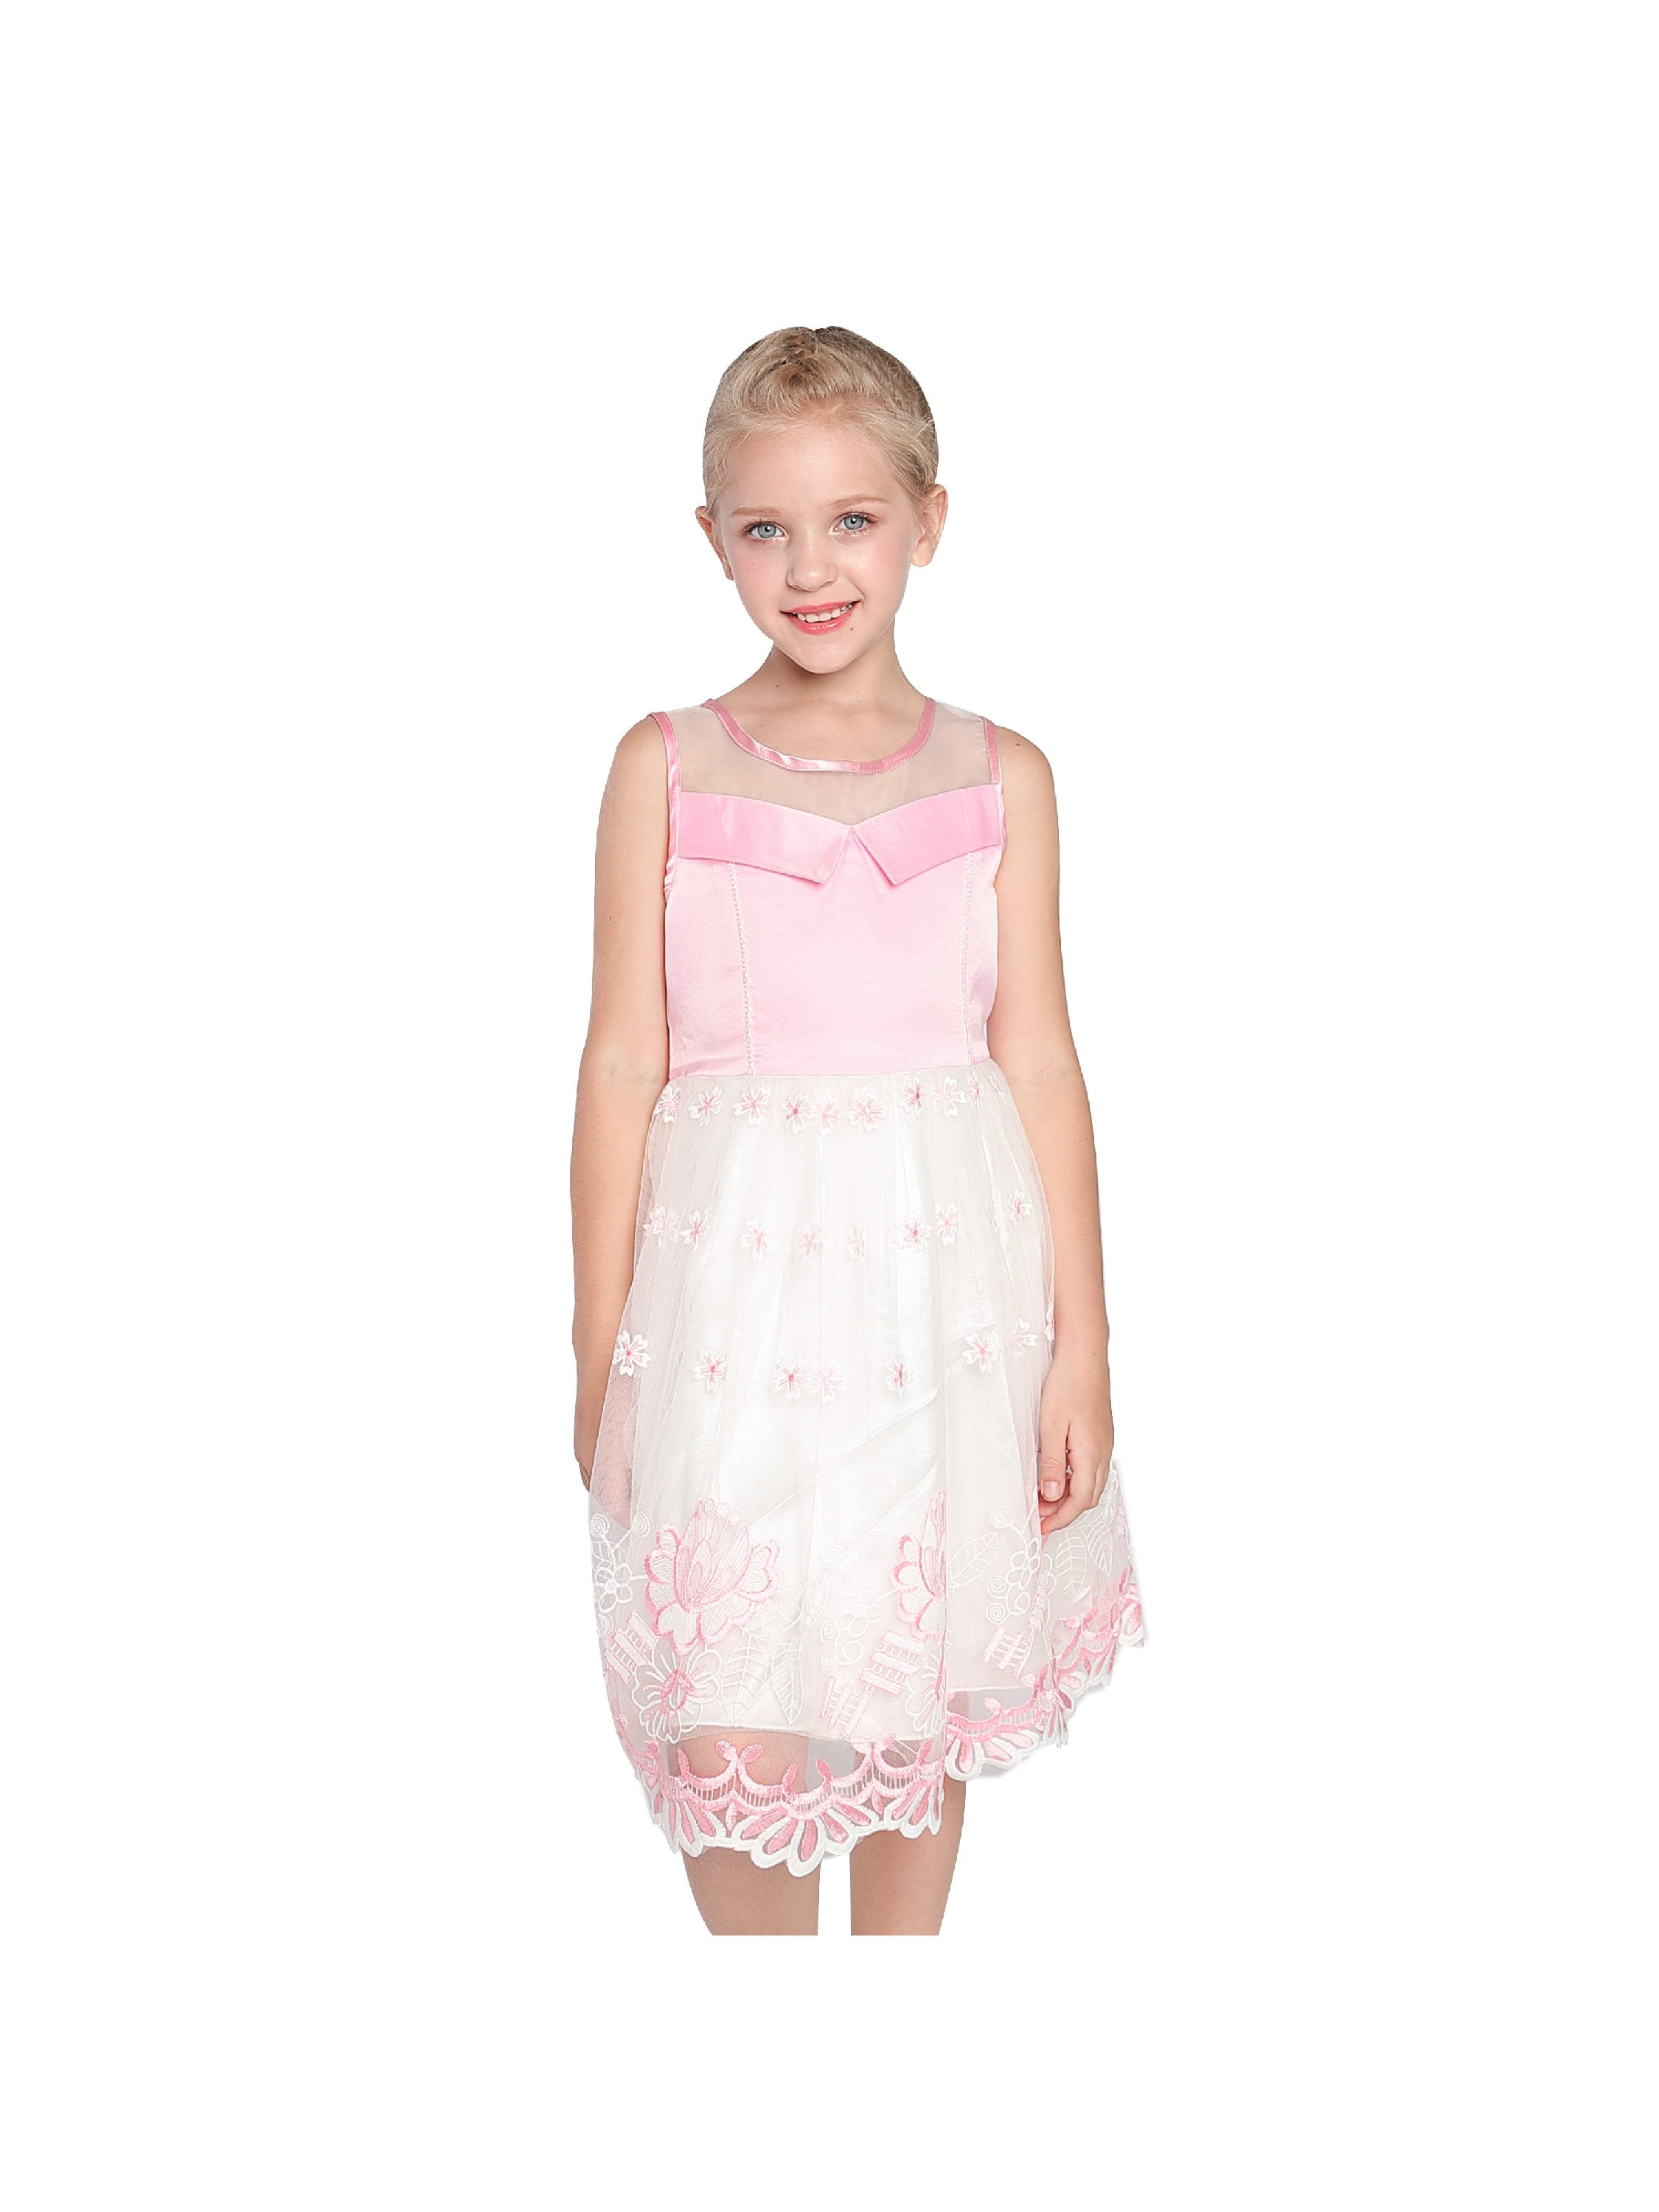 Sunny Fashion Girls Dress Ruffle Skirt Pink Flower Birthday Party Age 5-12 Years